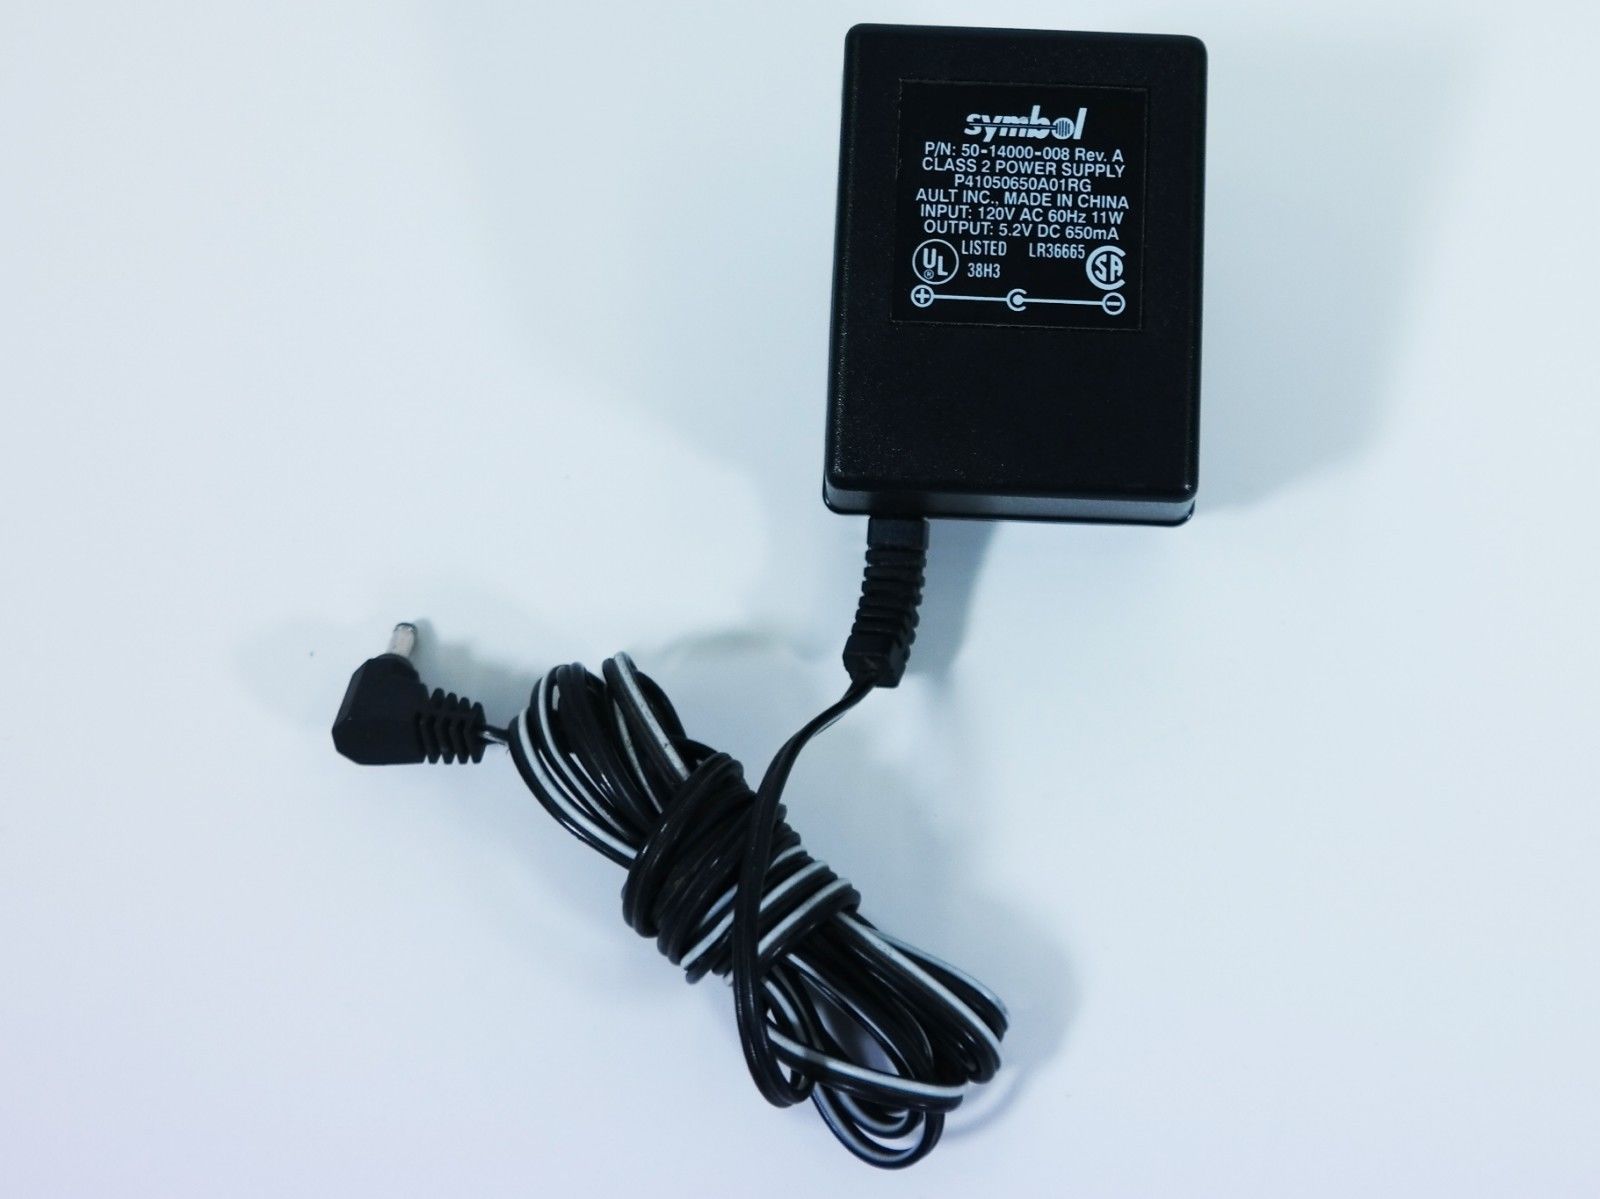 NEW 5.2V 650mA Symbol P41050650A01RG 50-14000-008 AC Adapter - Click Image to Close